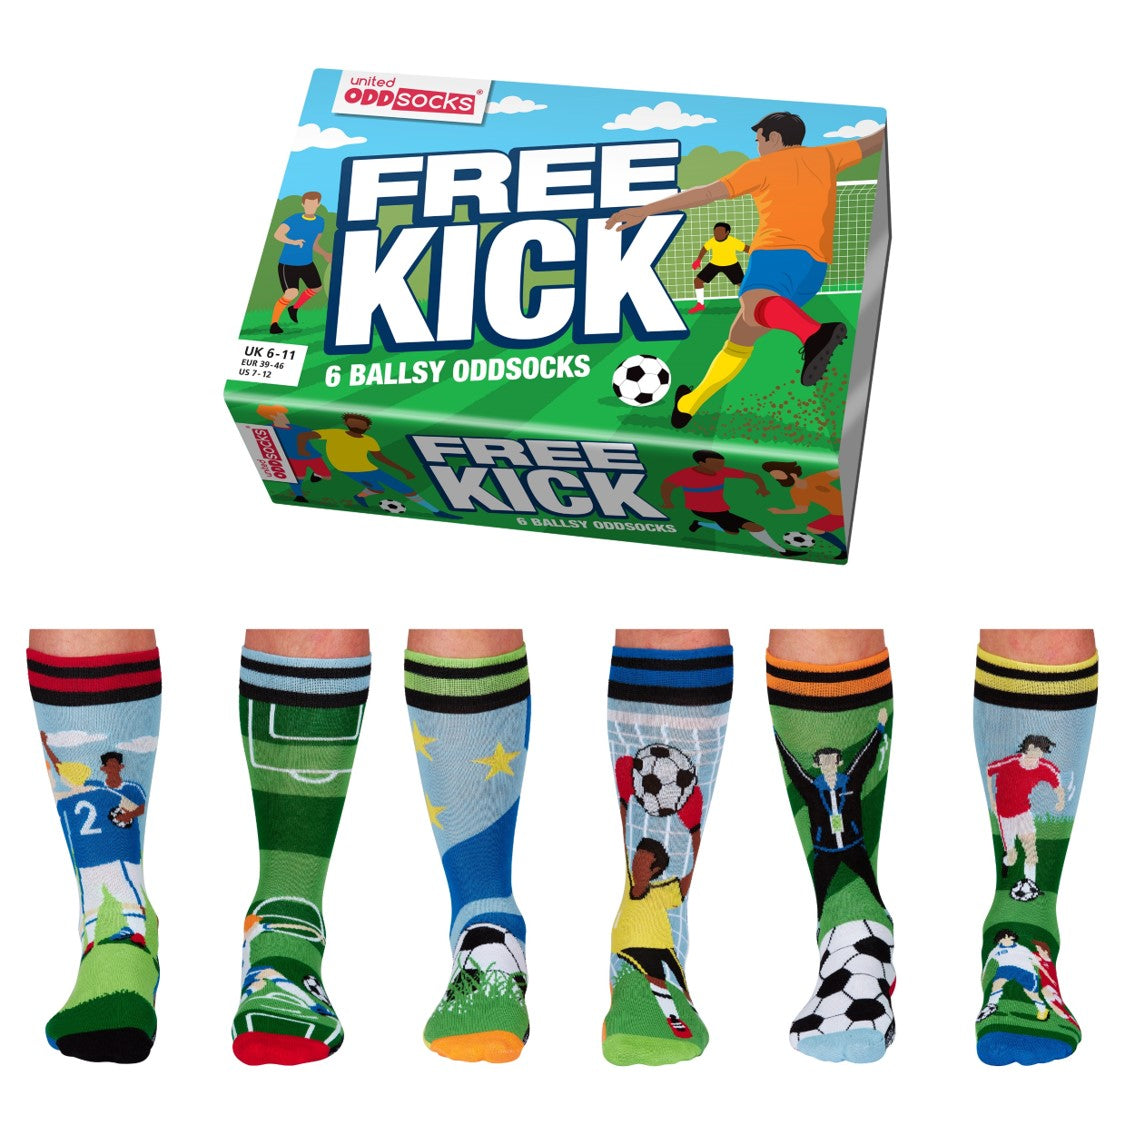 United Oddsocks Freekick Odd Socks UK 6 - 11